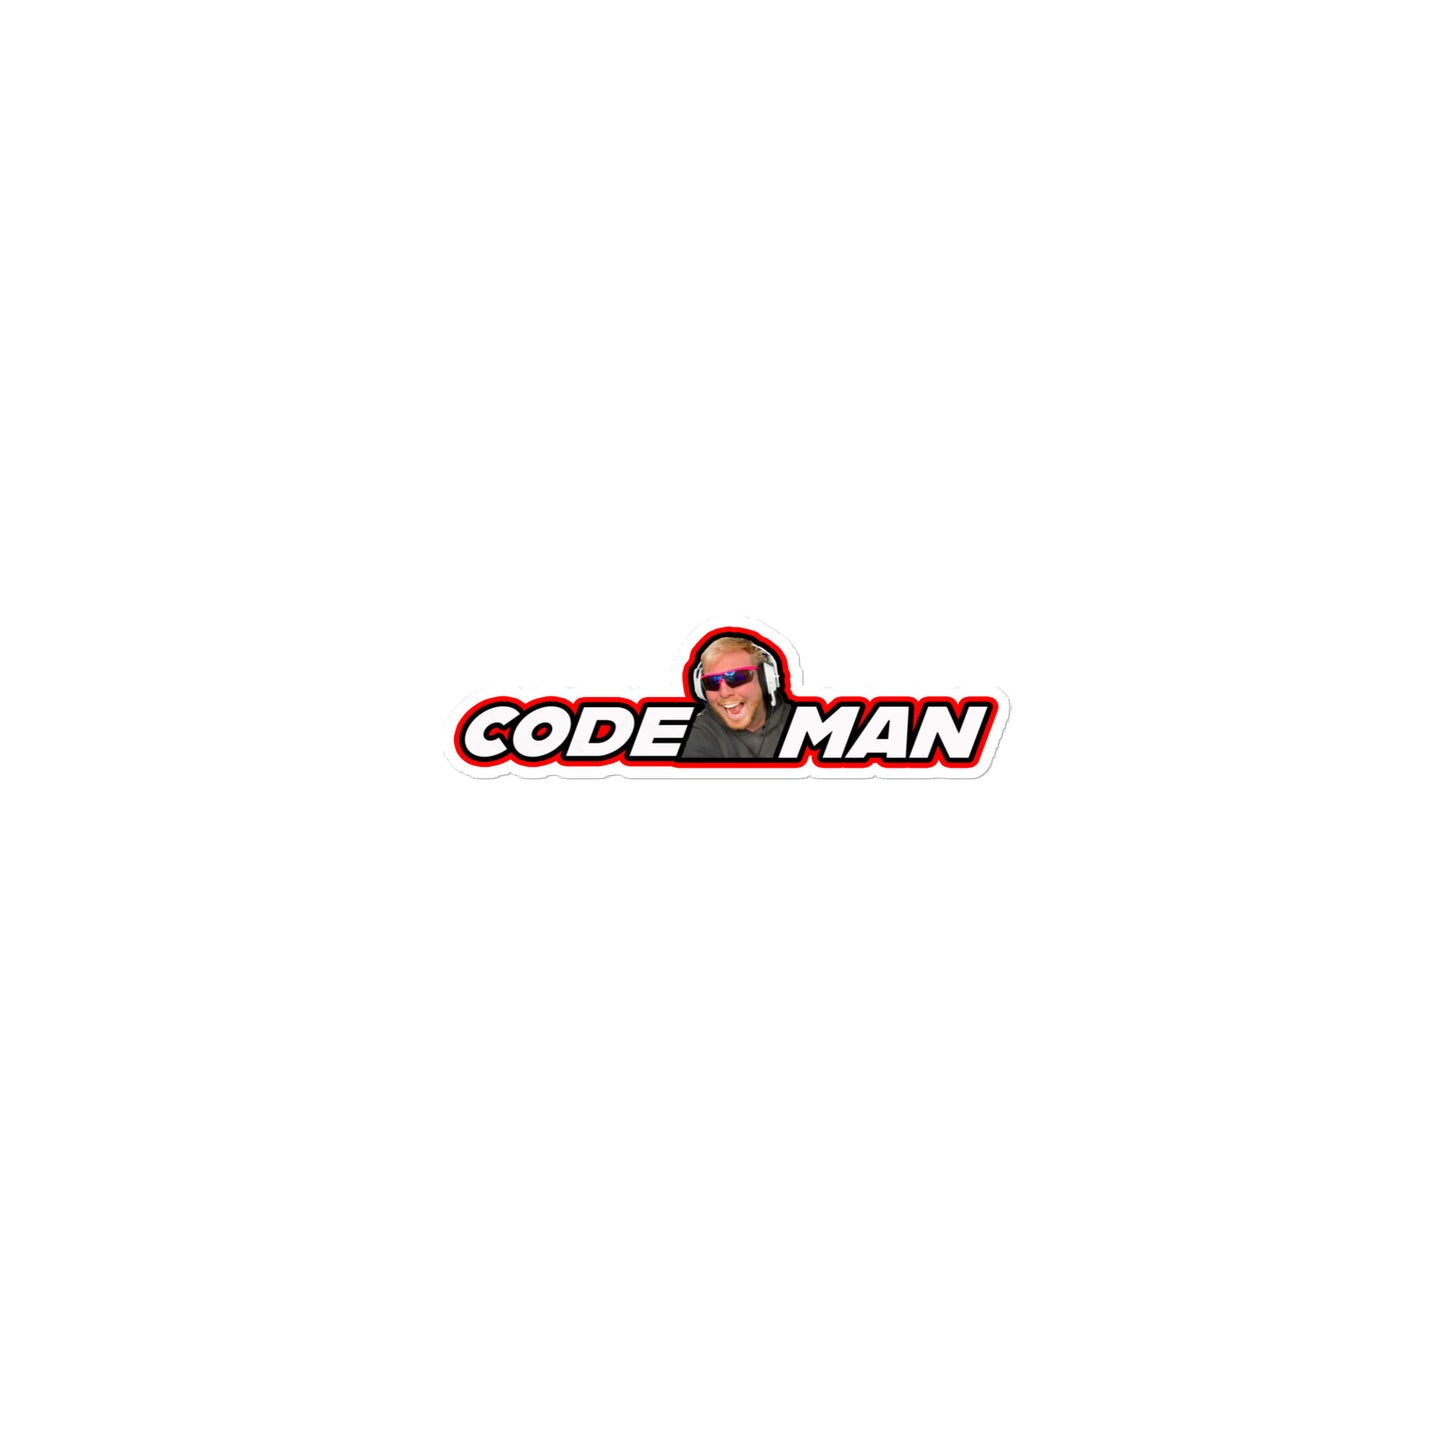 Codeman Bubble-free stickers